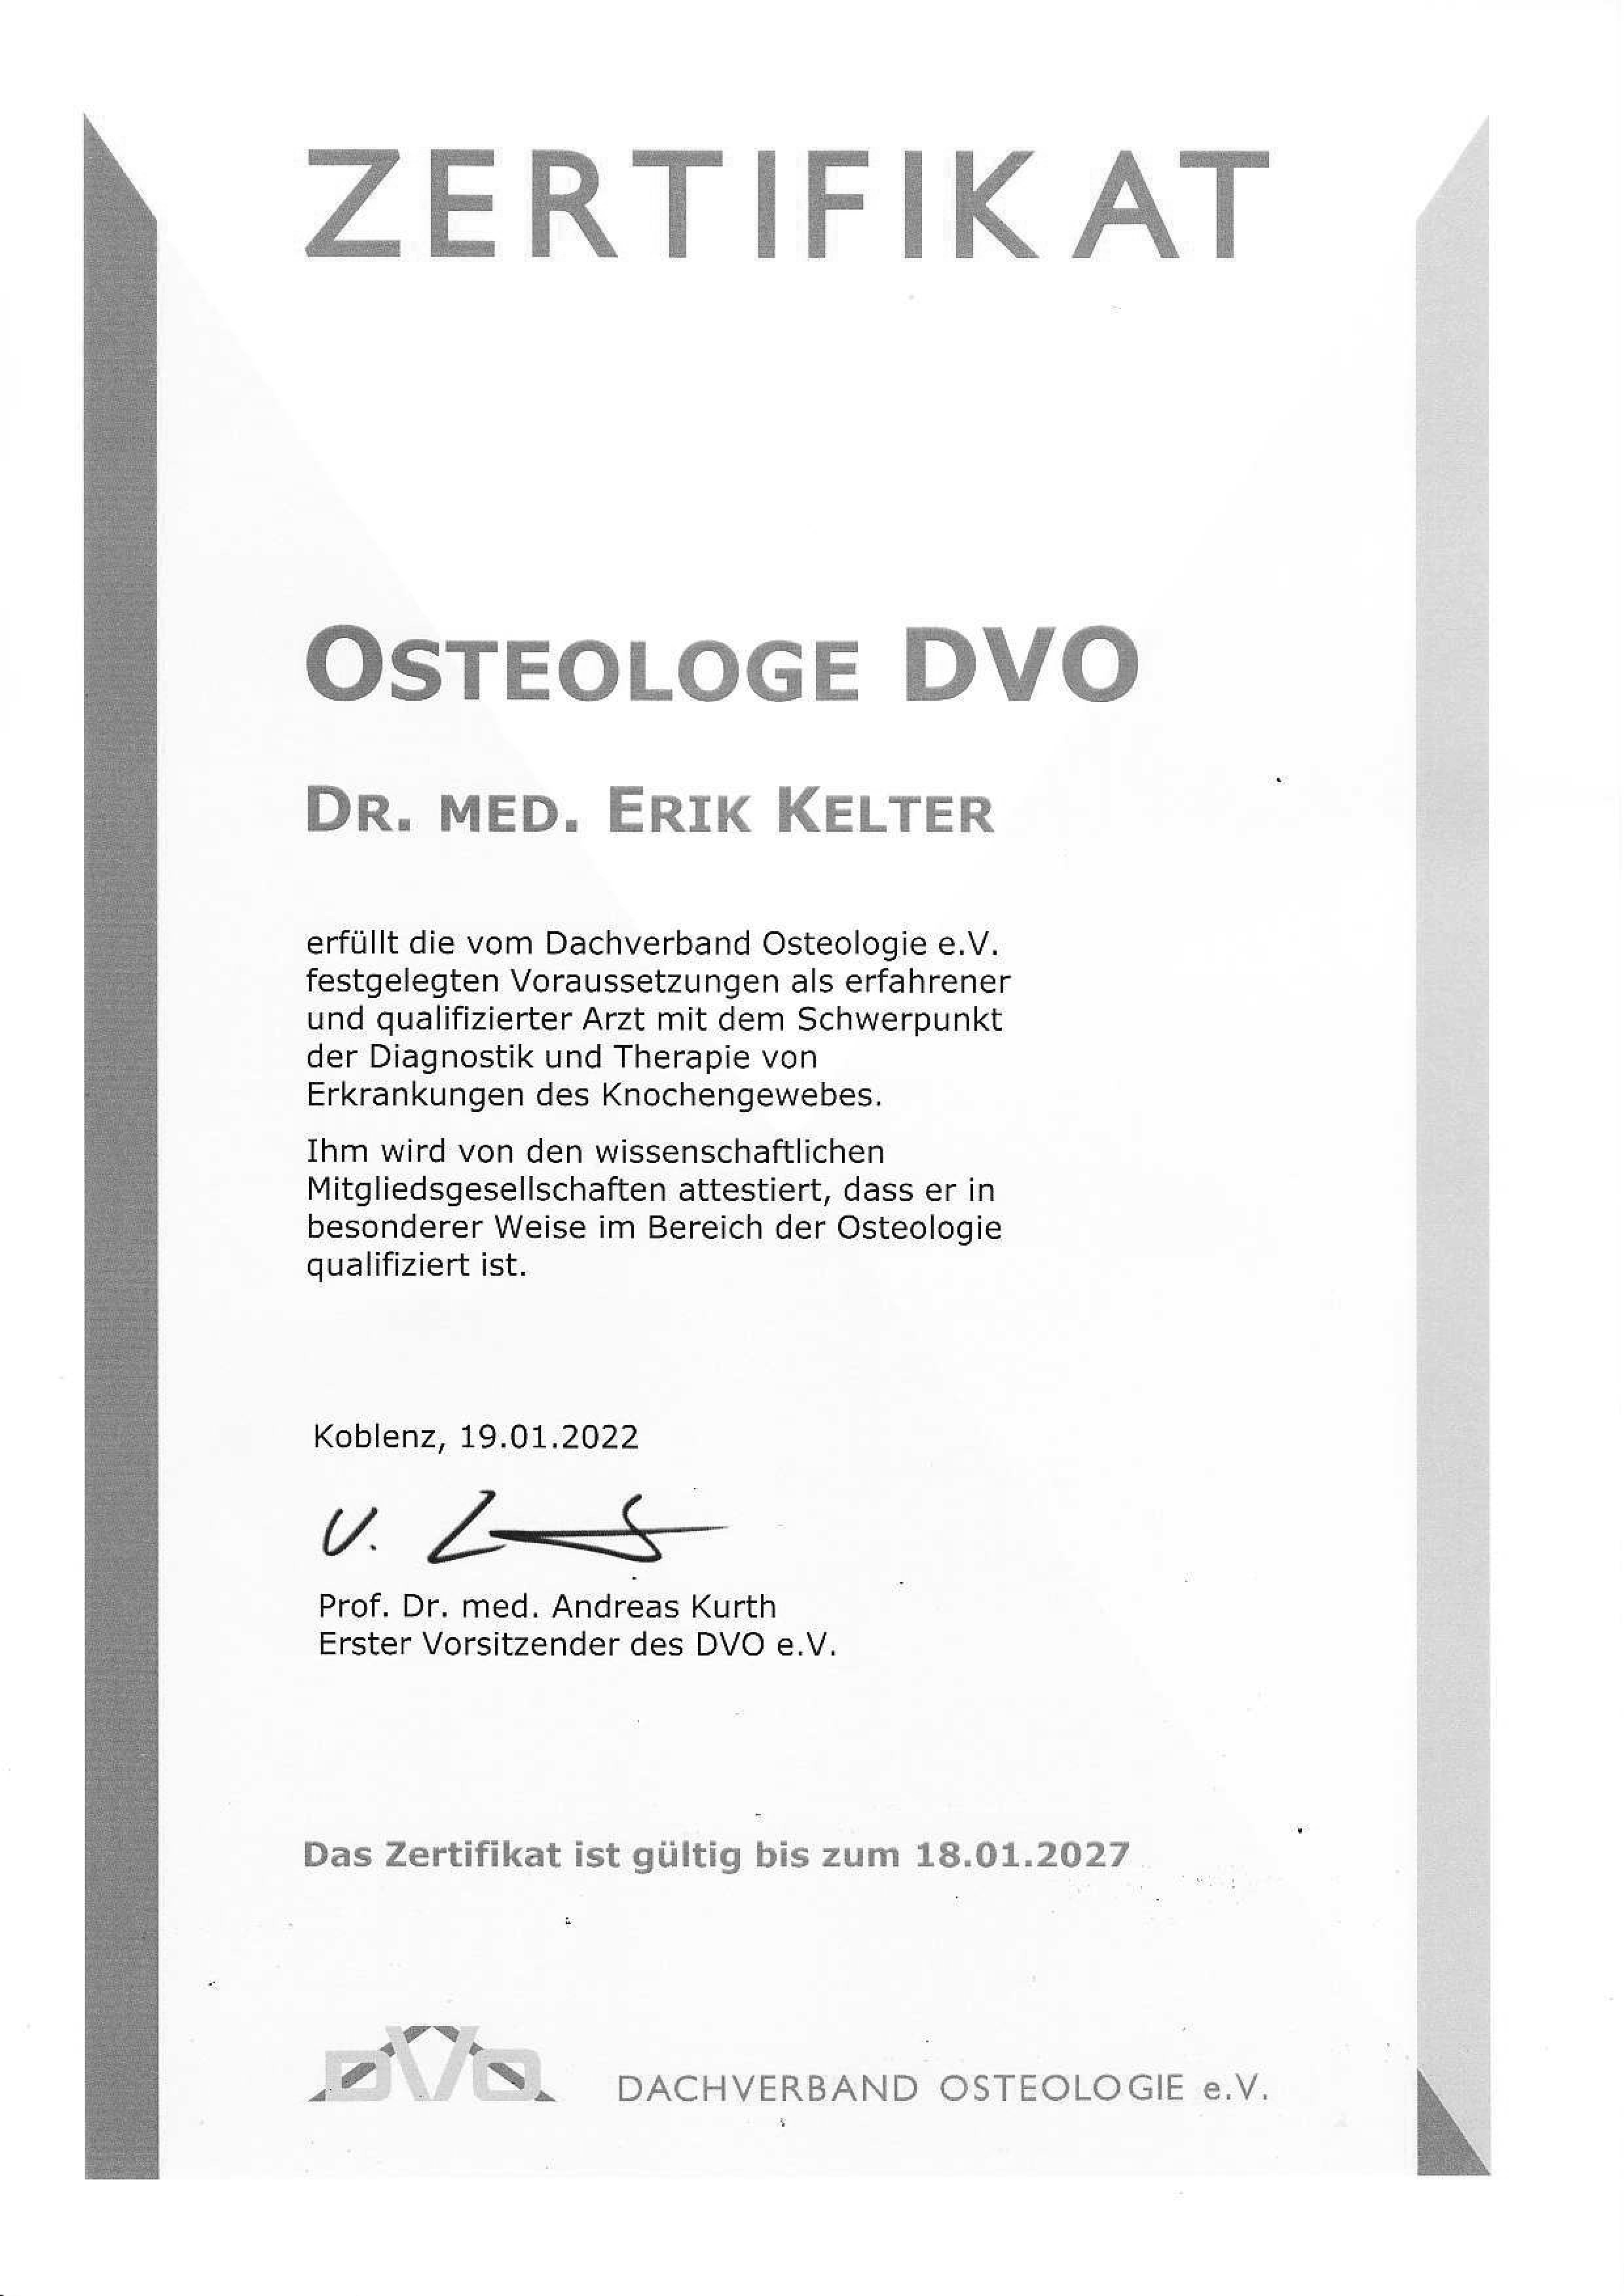 Osteologe DVO